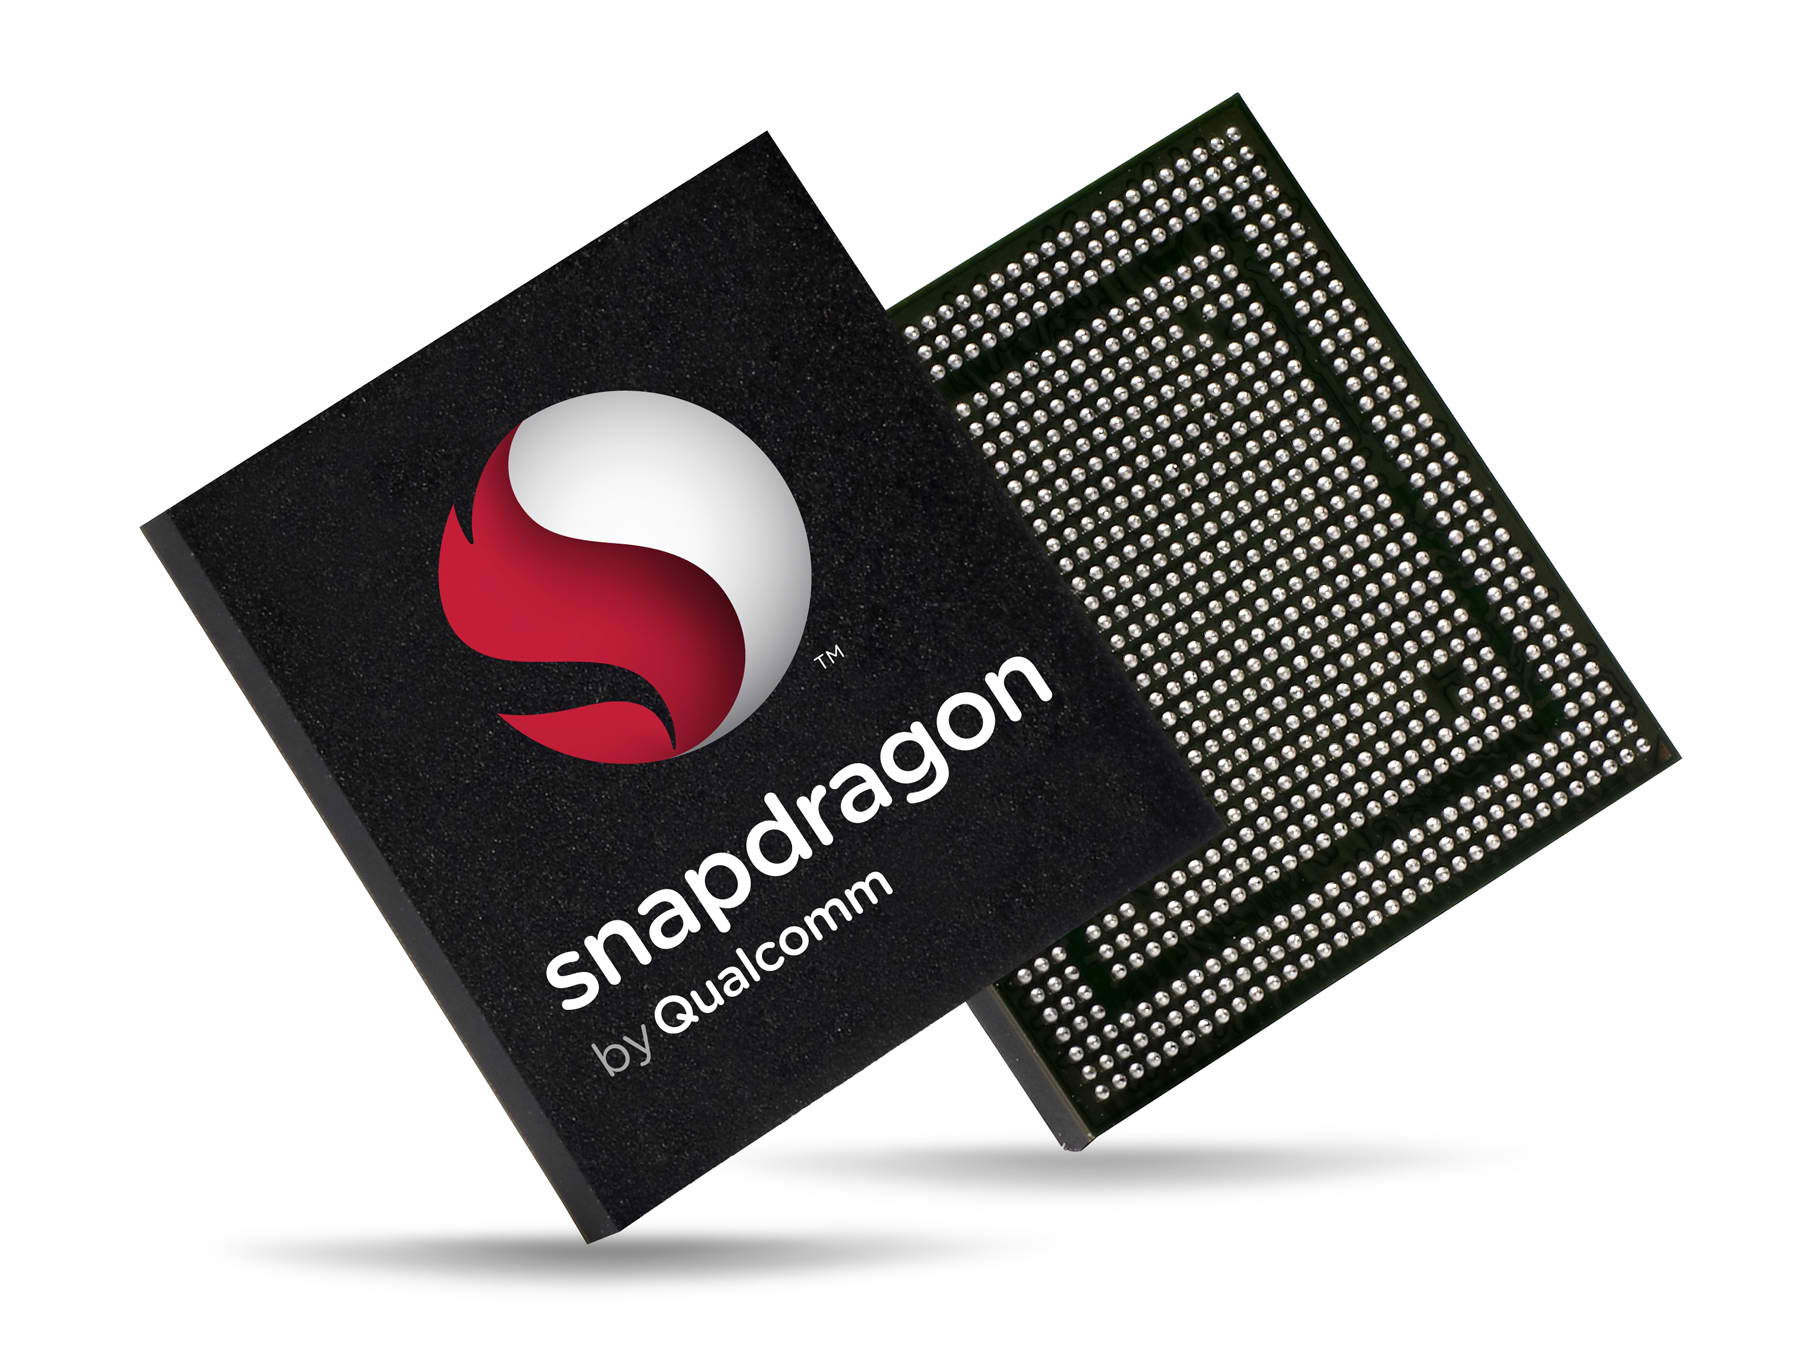 Qualcomm Snapdragon SOC